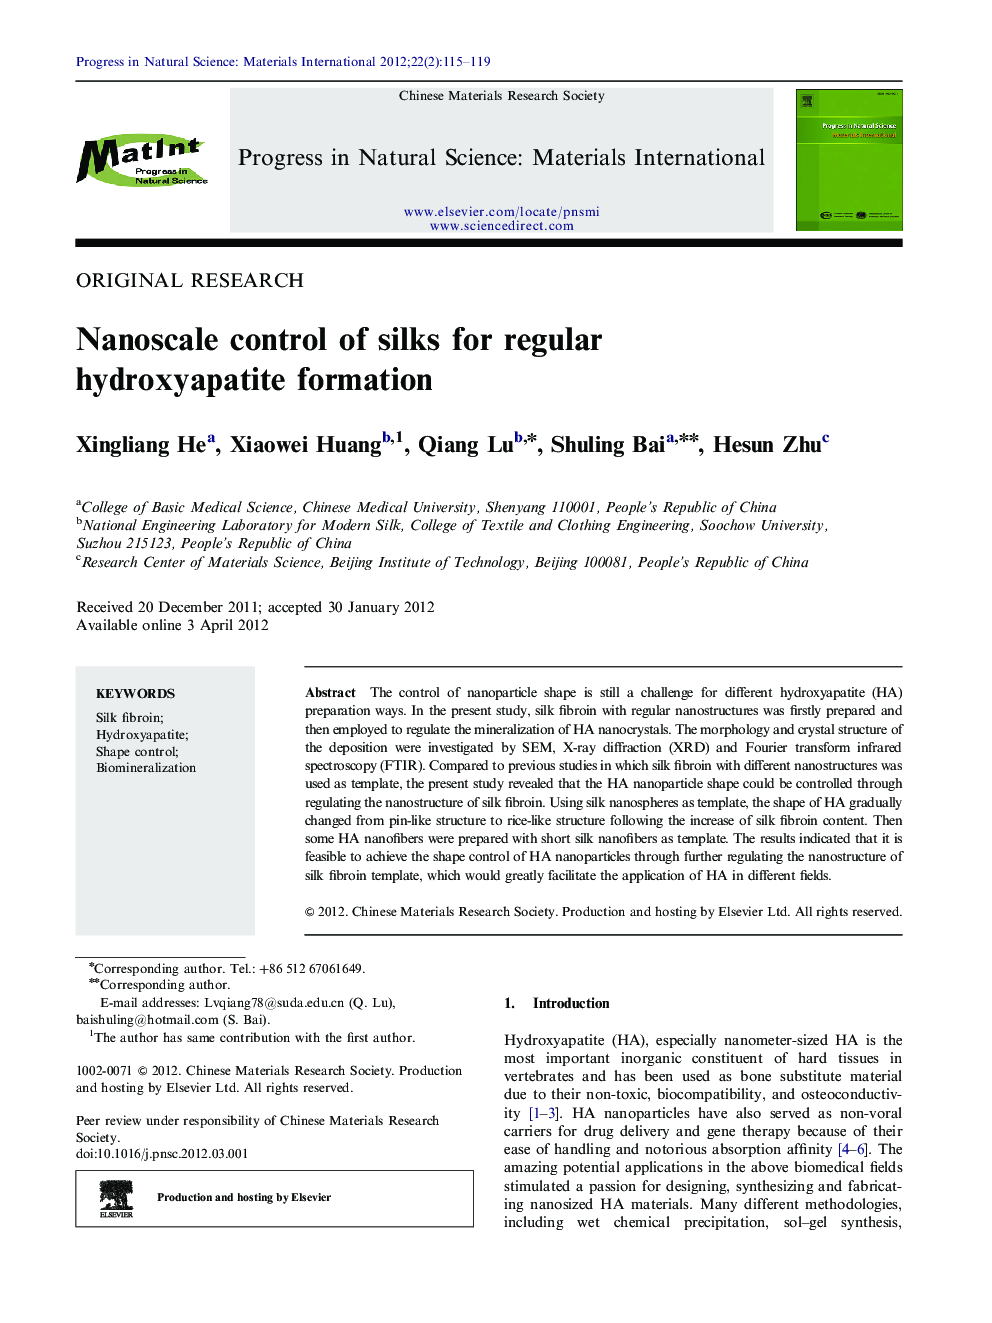 Nanoscale control of silks for regular hydroxyapatite formation